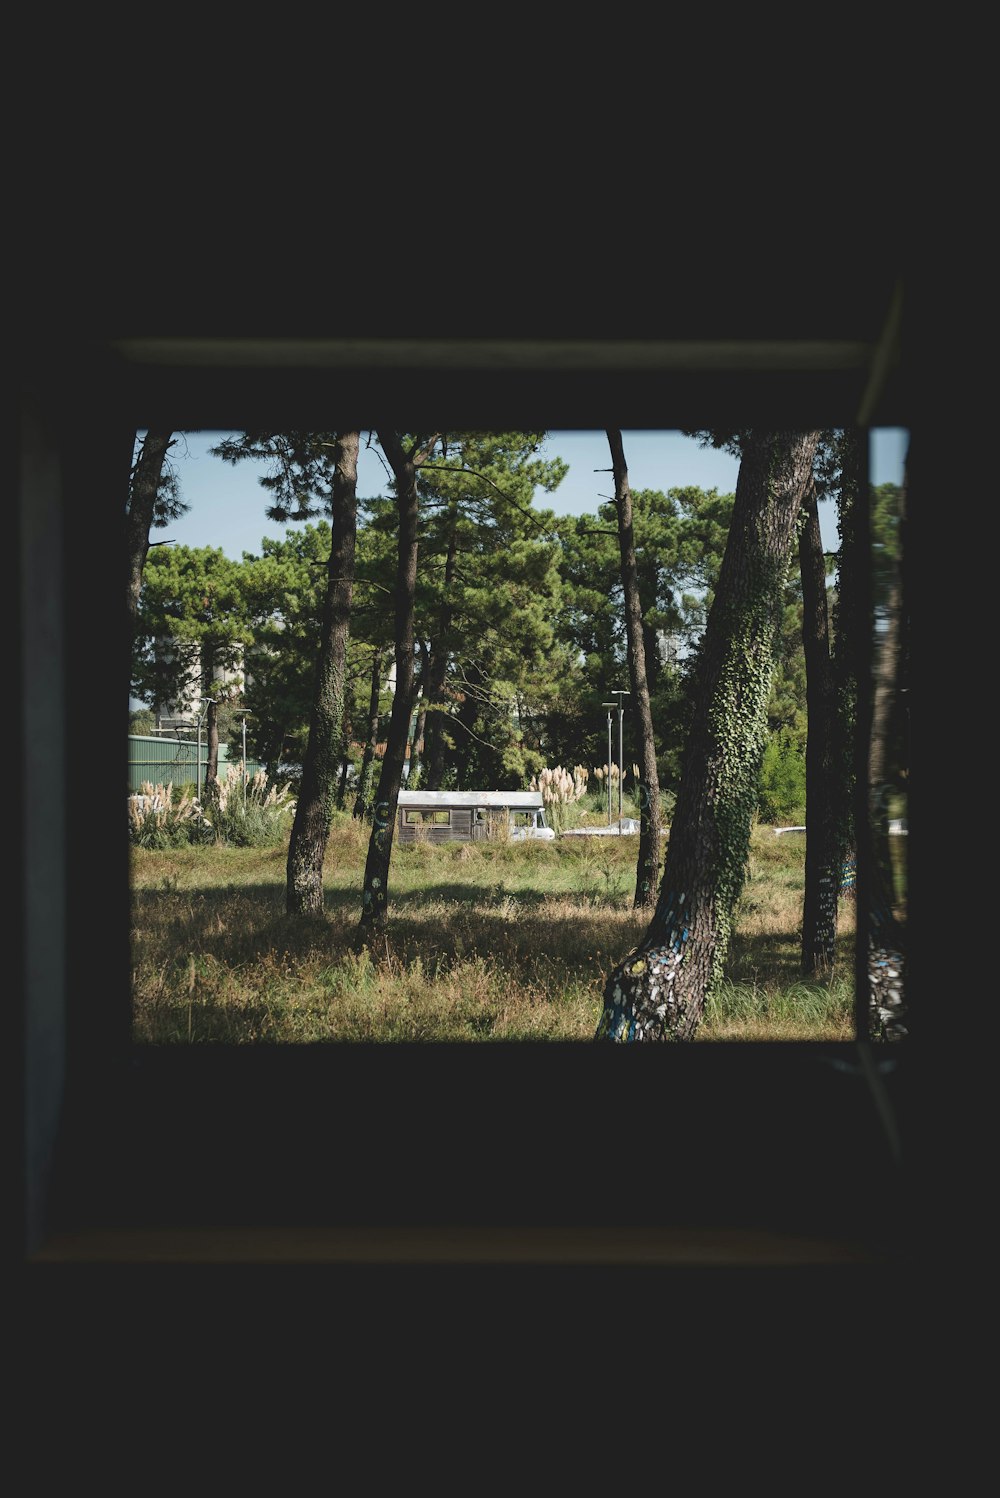 a view of a park through a window